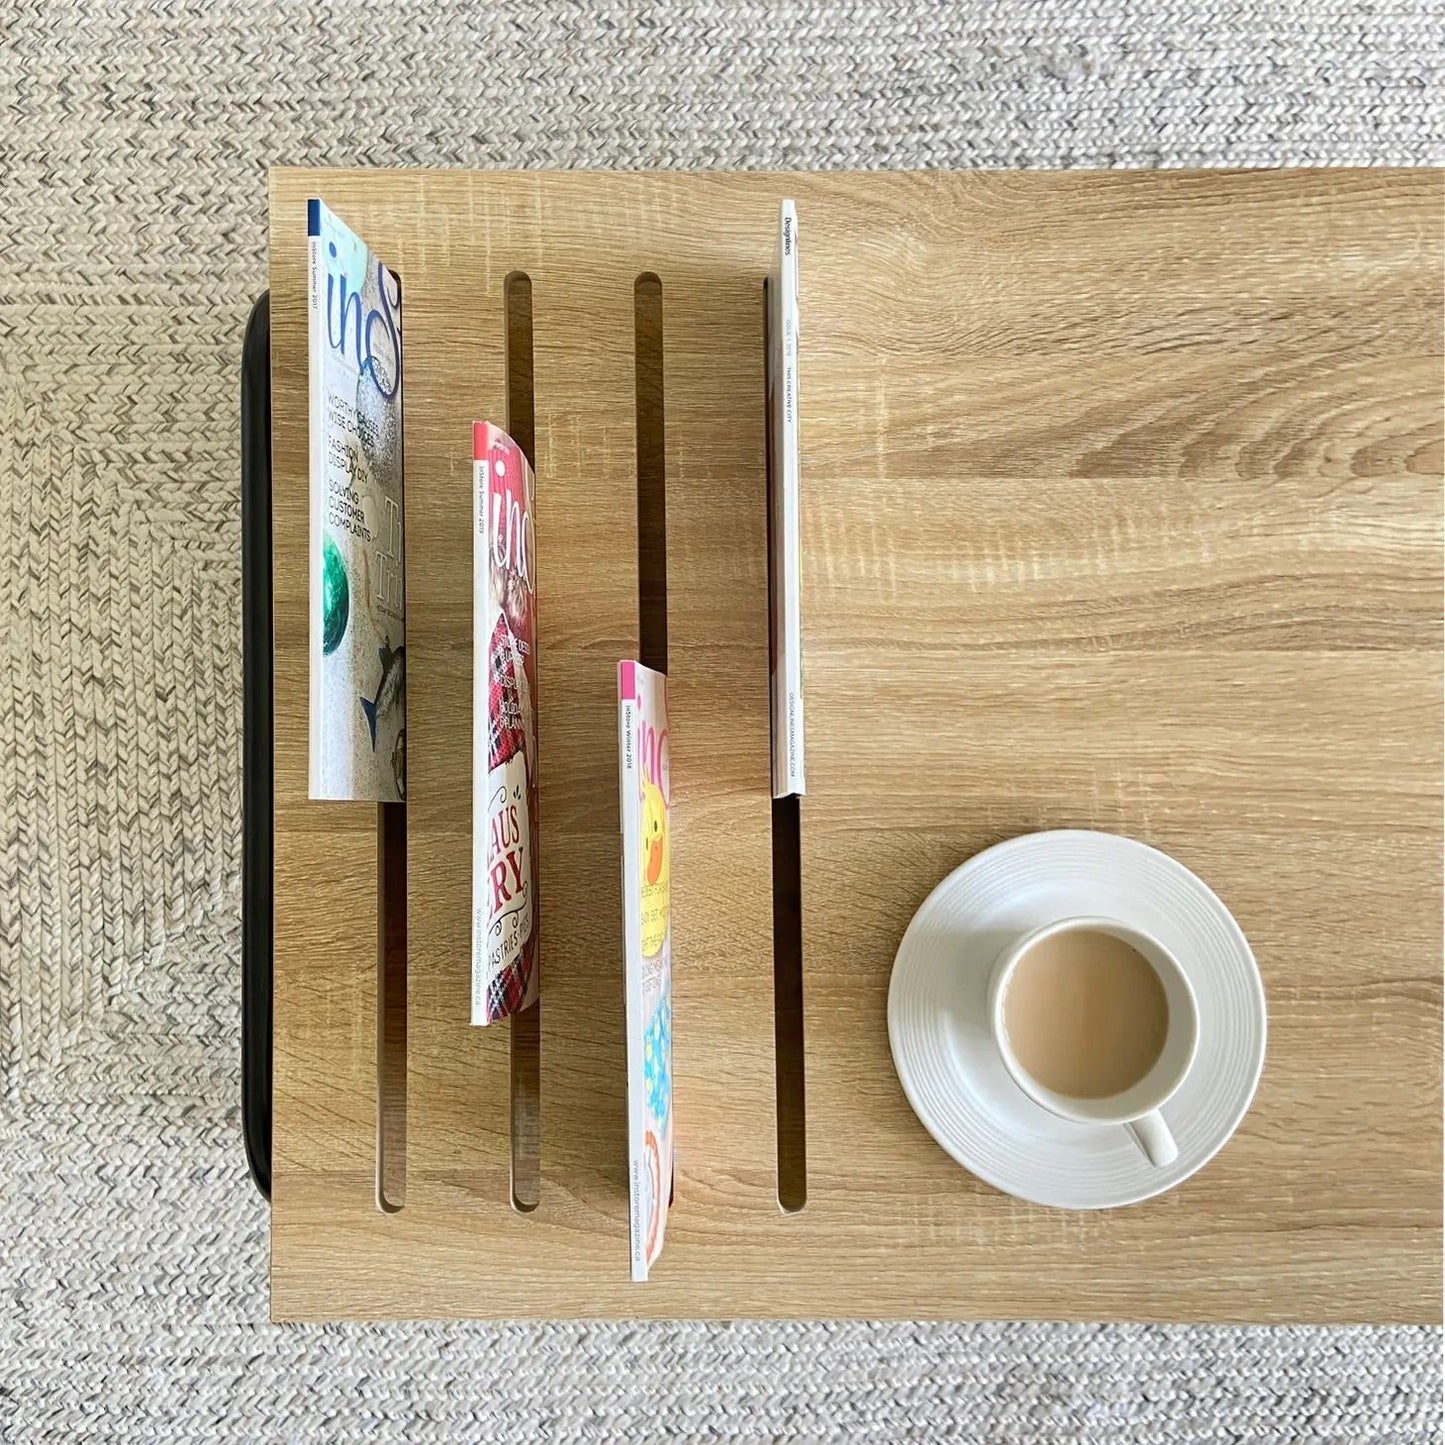 34" Scandinavian Coffee Table with Magazine Storage - Oak wood finish